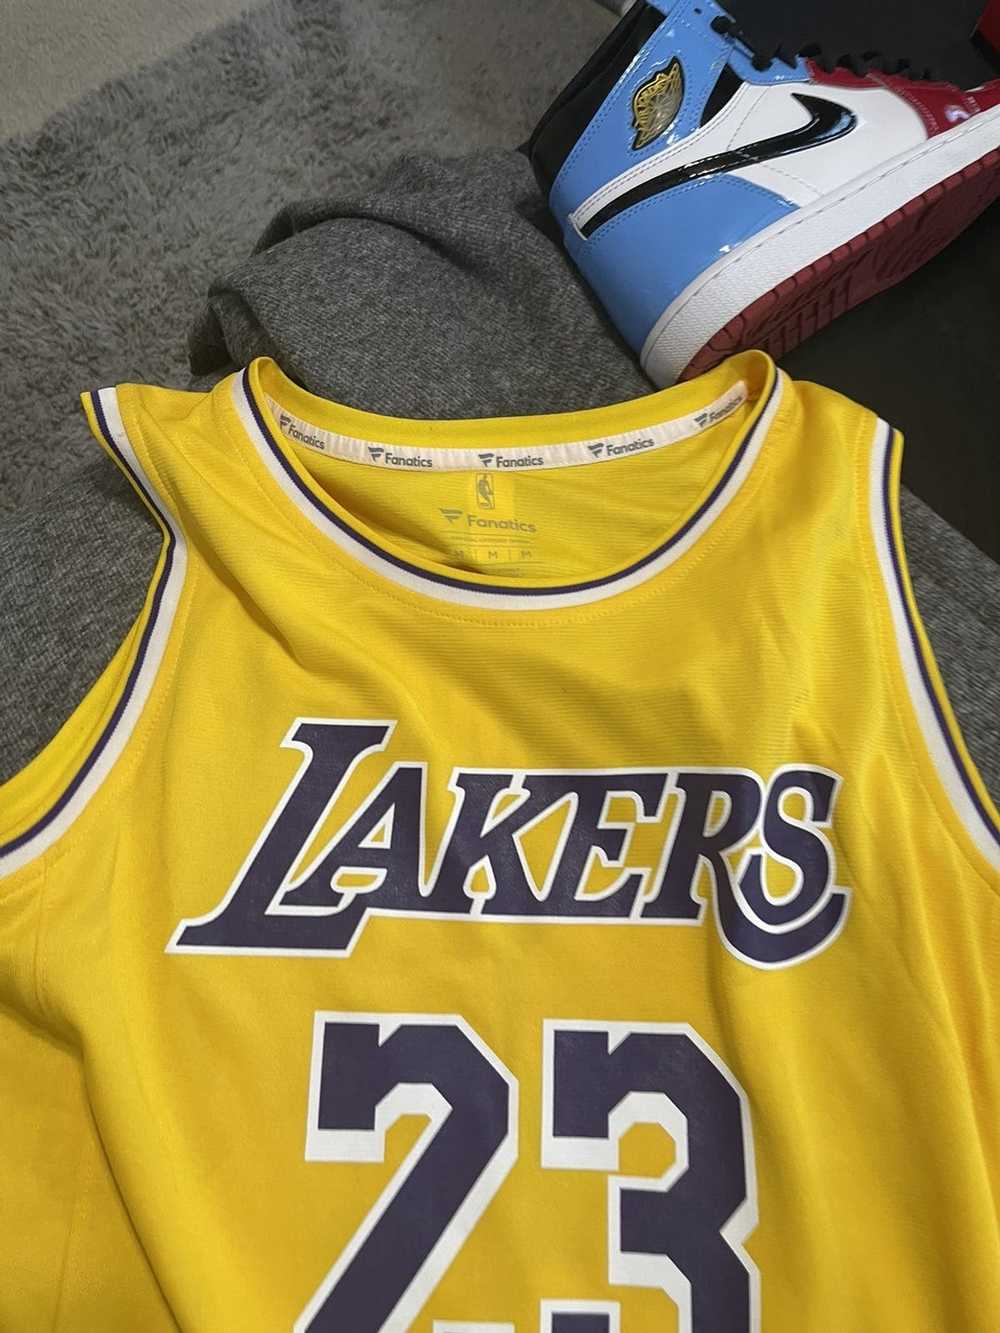 NBA Lakers Lebron James - image 3